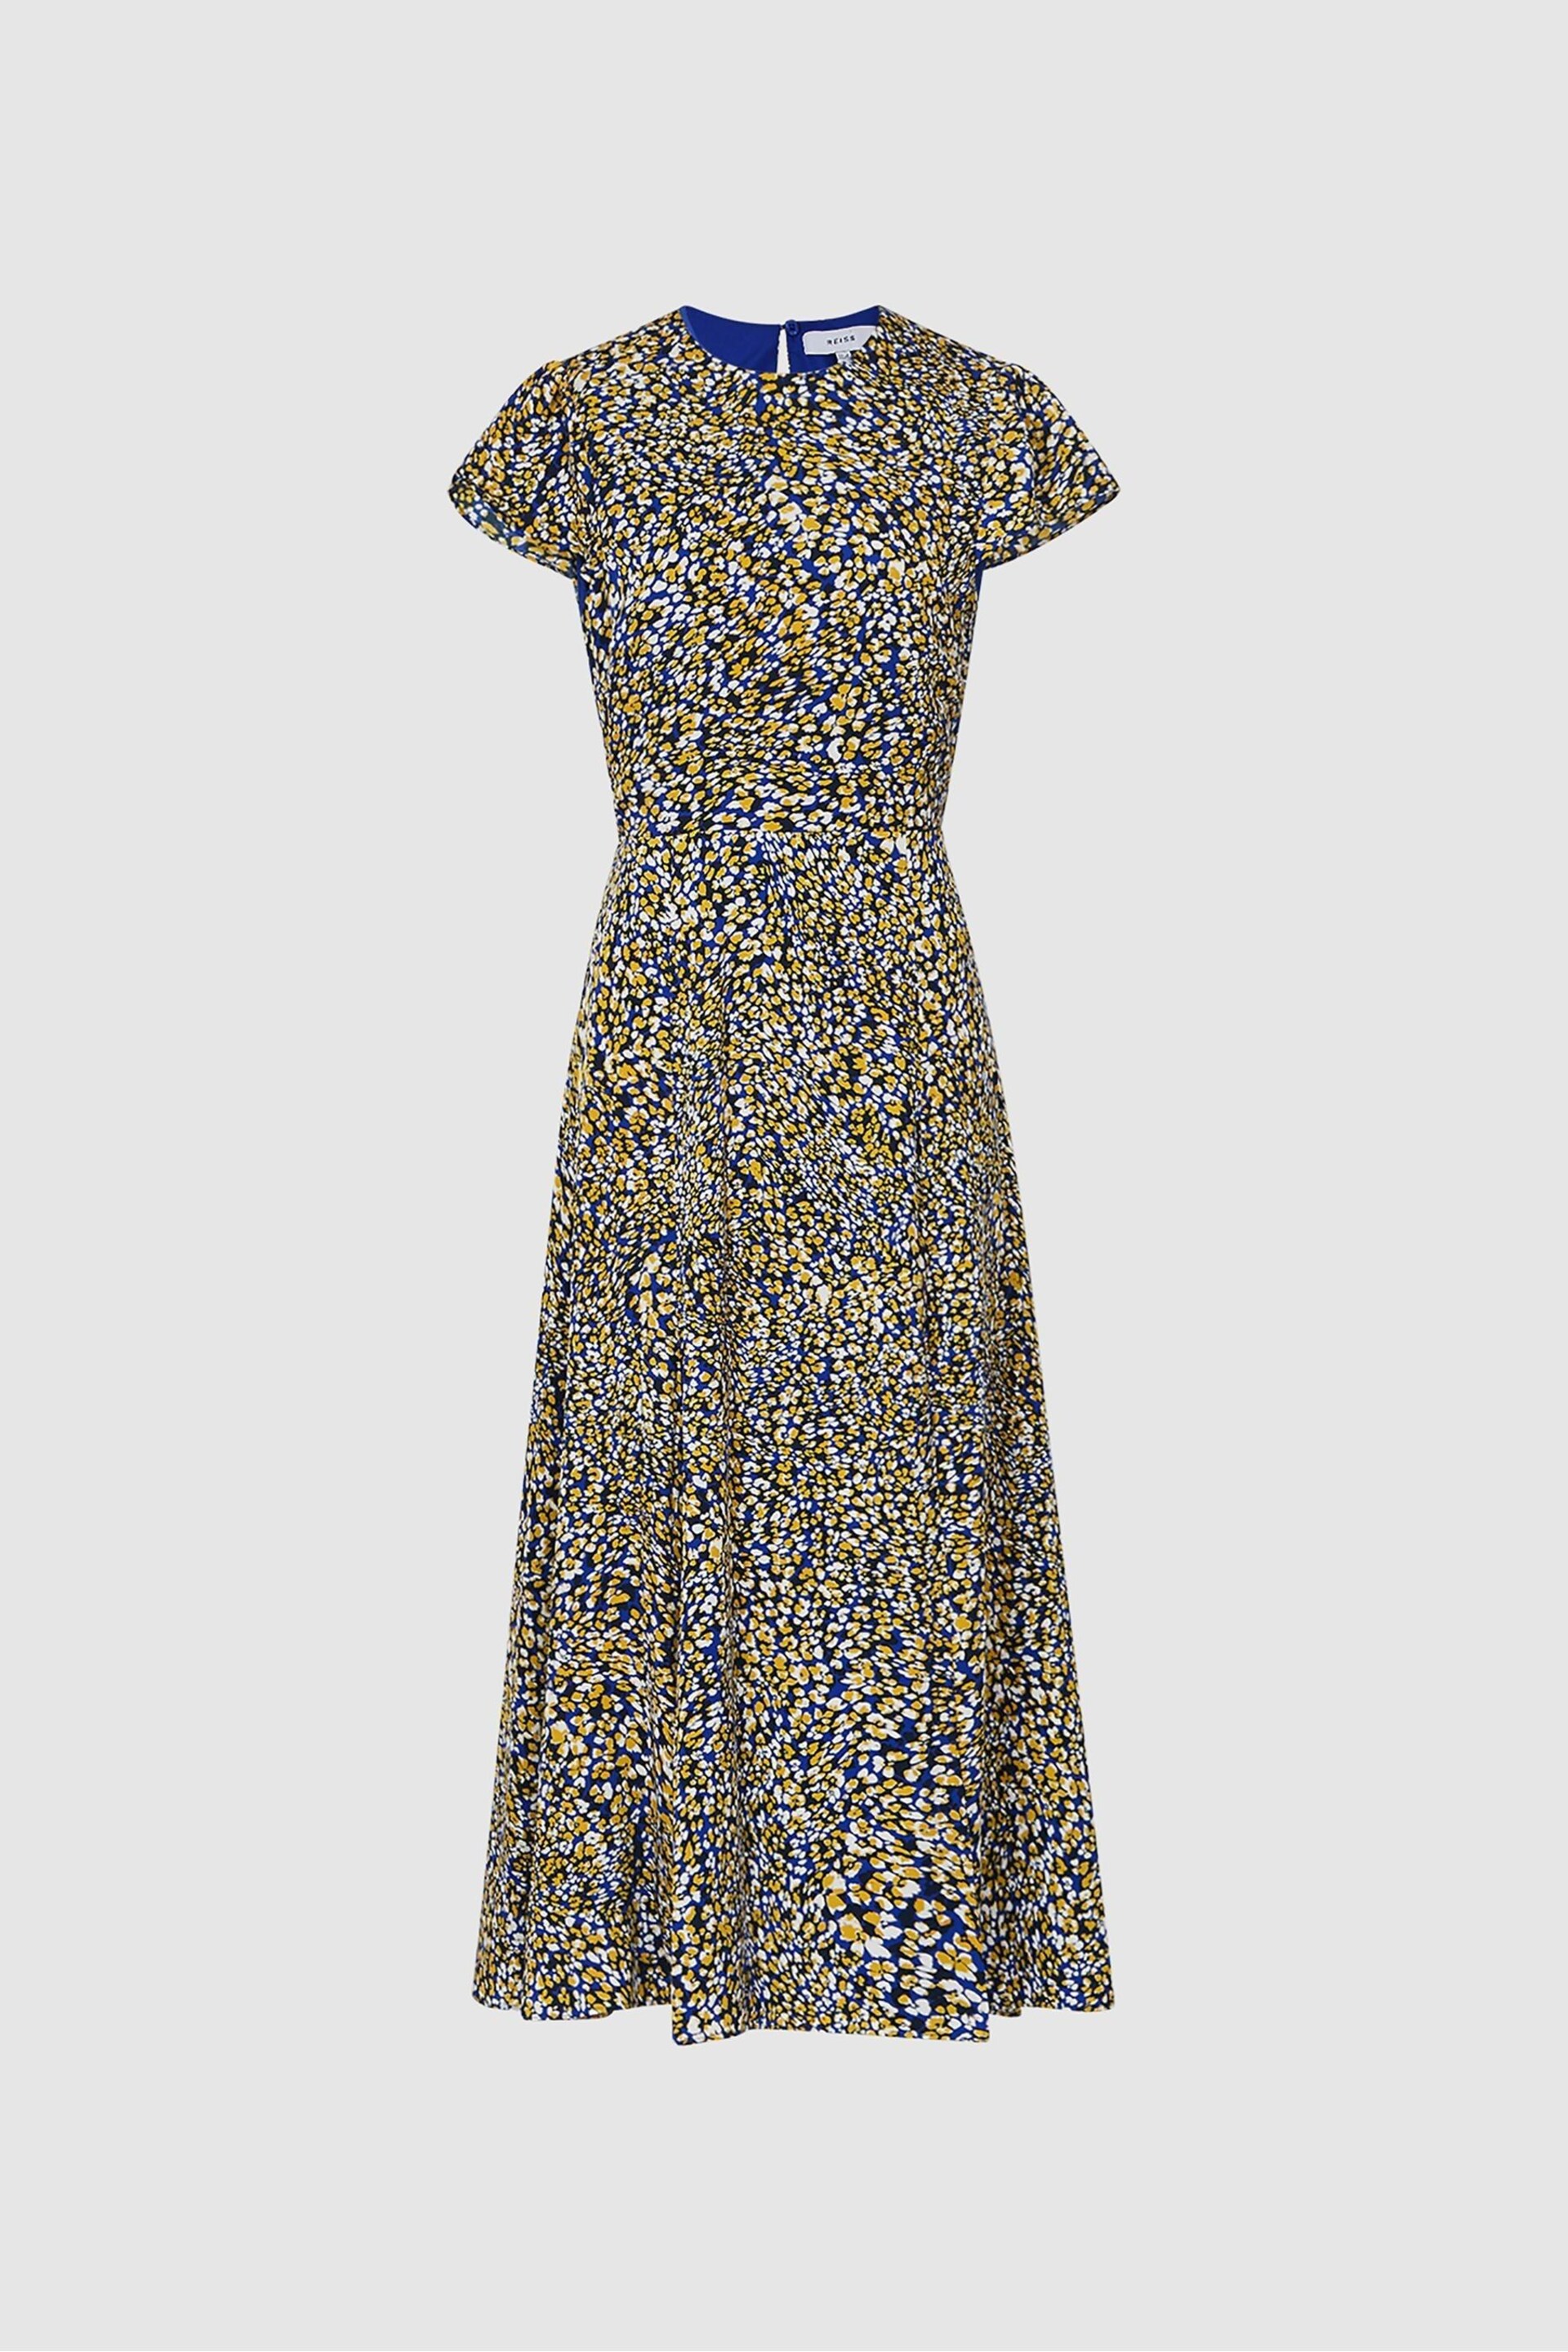 Reiss Blue Livia Printed Cut Out Back Midi Dress - Image 2 of 6